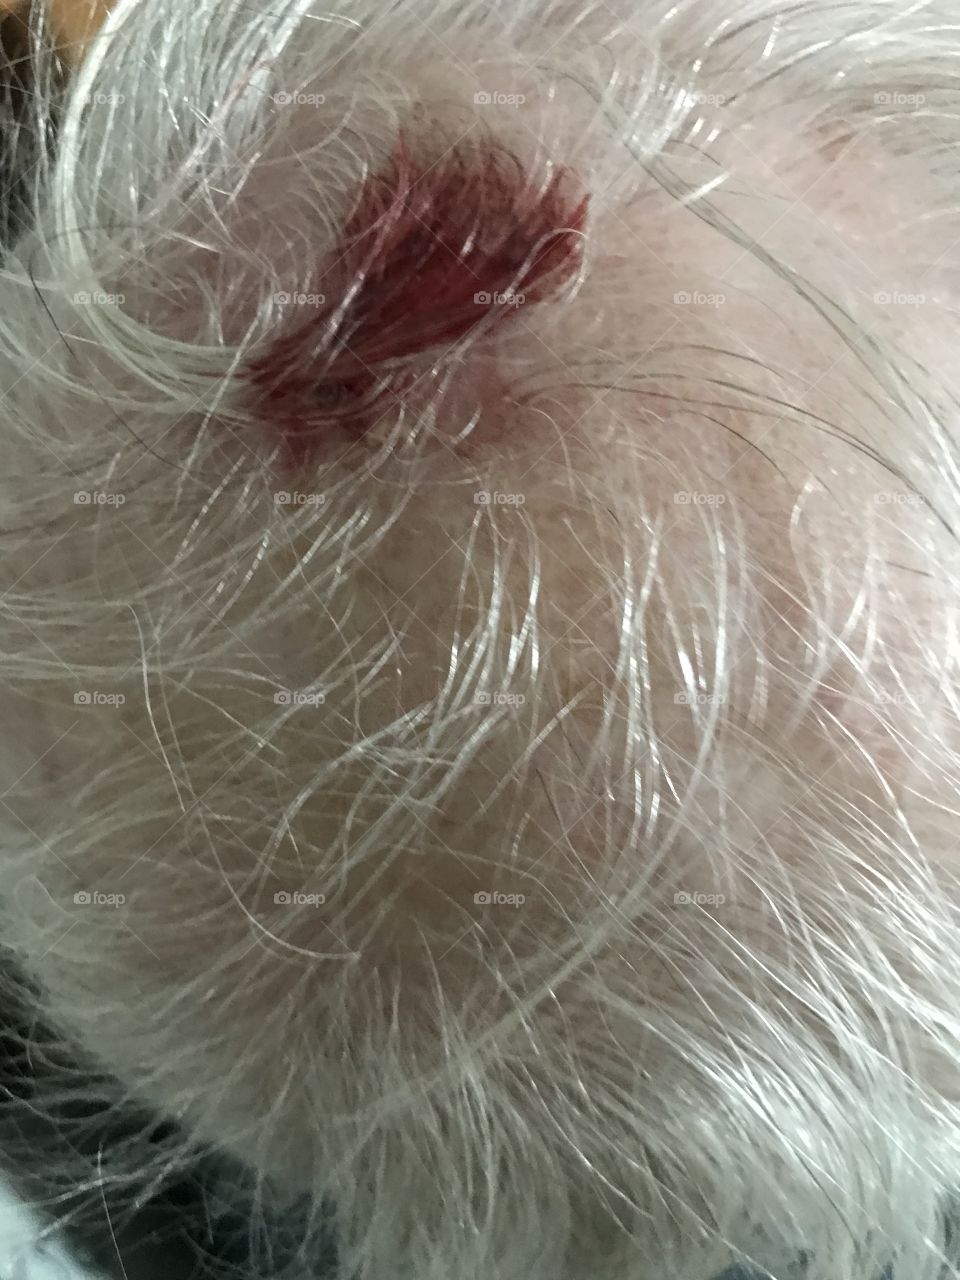 Bloody scalp injury on elderly person